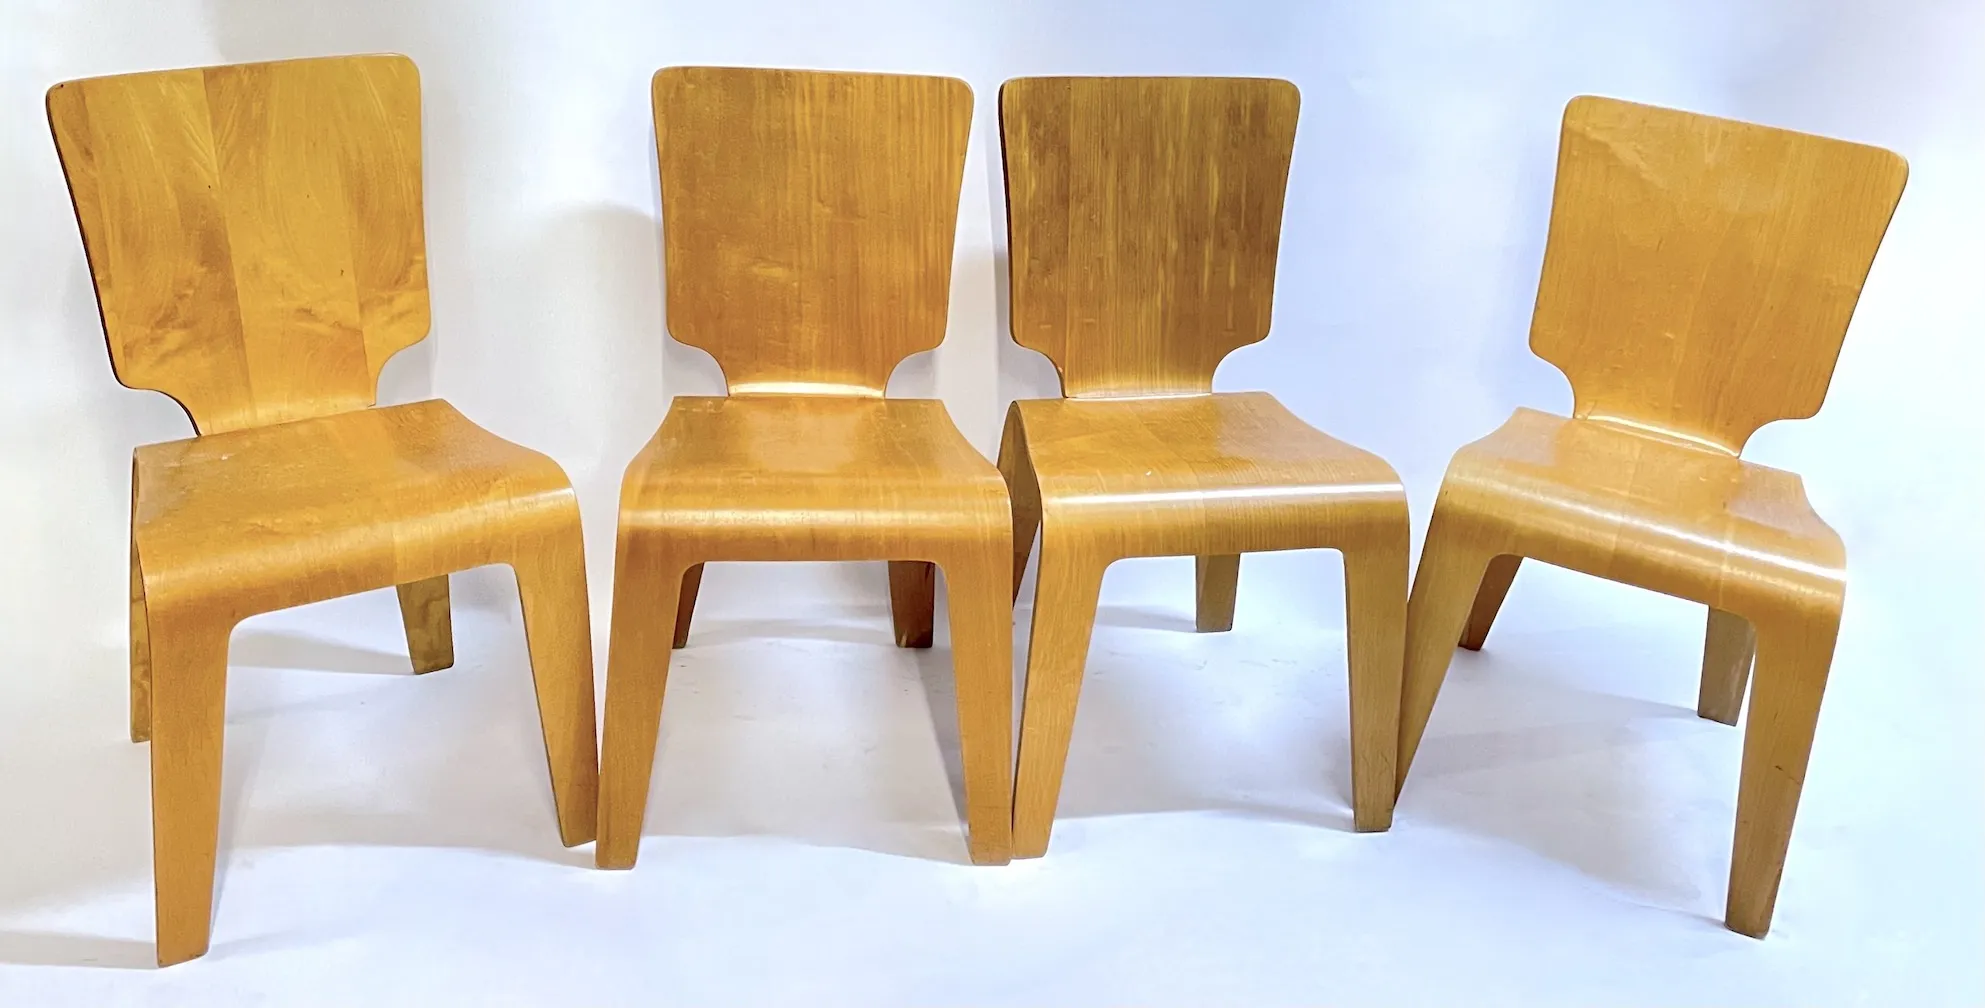 Thaden Jordan Molded Plywood Chairs - Set of 4